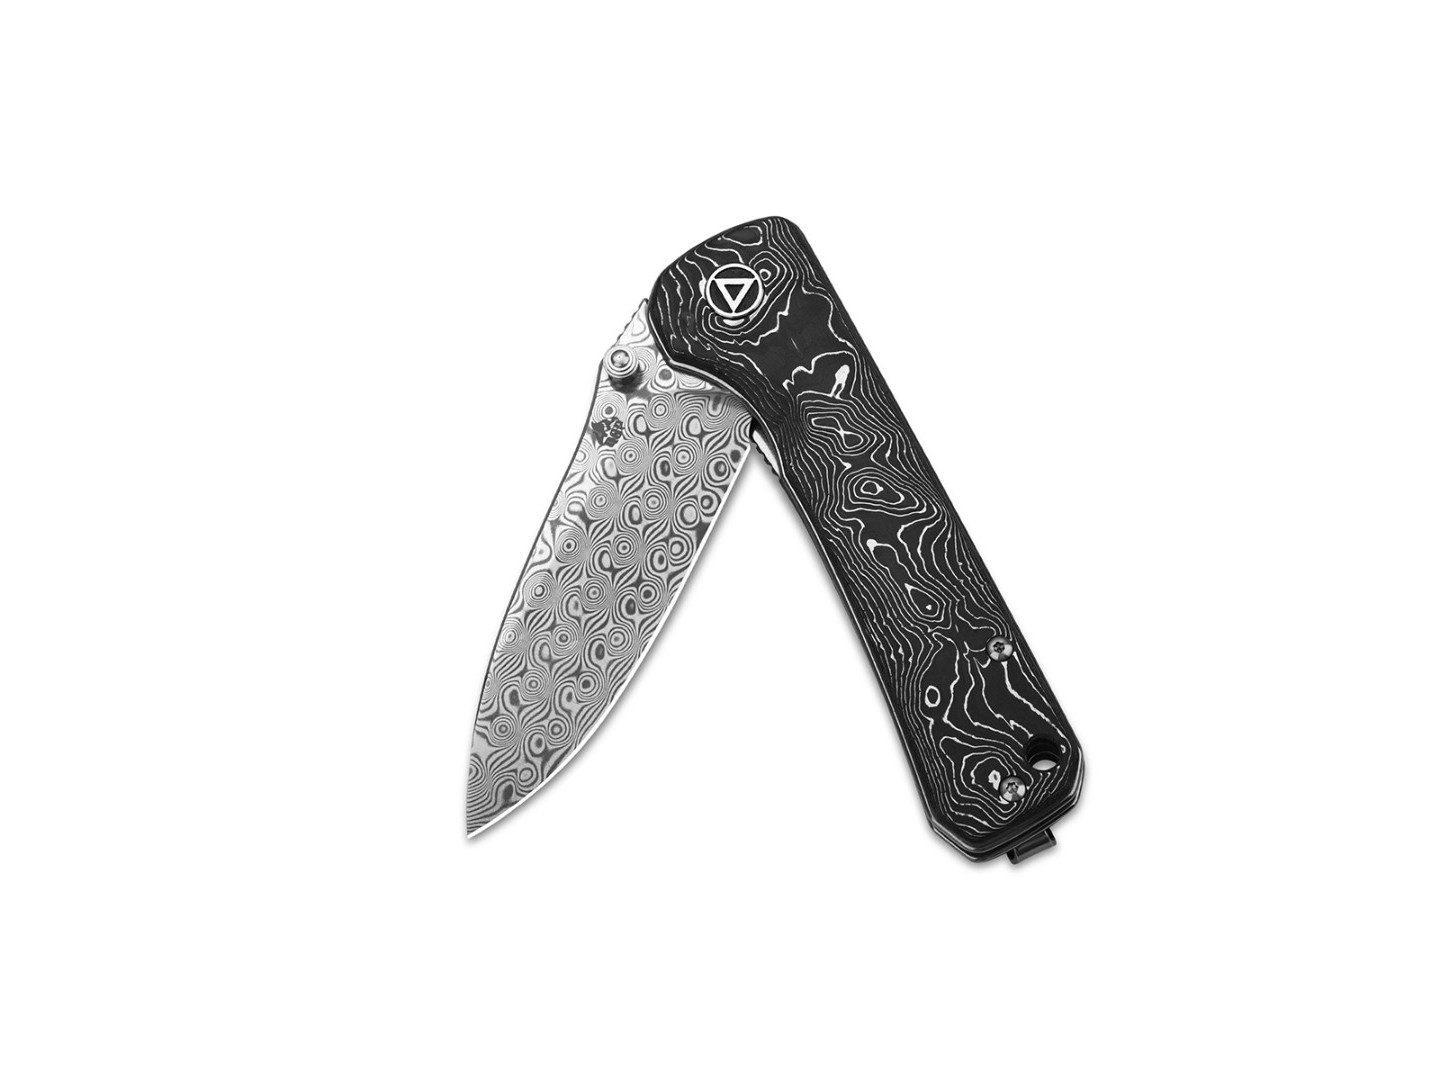 Нож QSP Hawk QS131-Q сталь Damascus, рукоять Aluminium Foil Carbon fiber